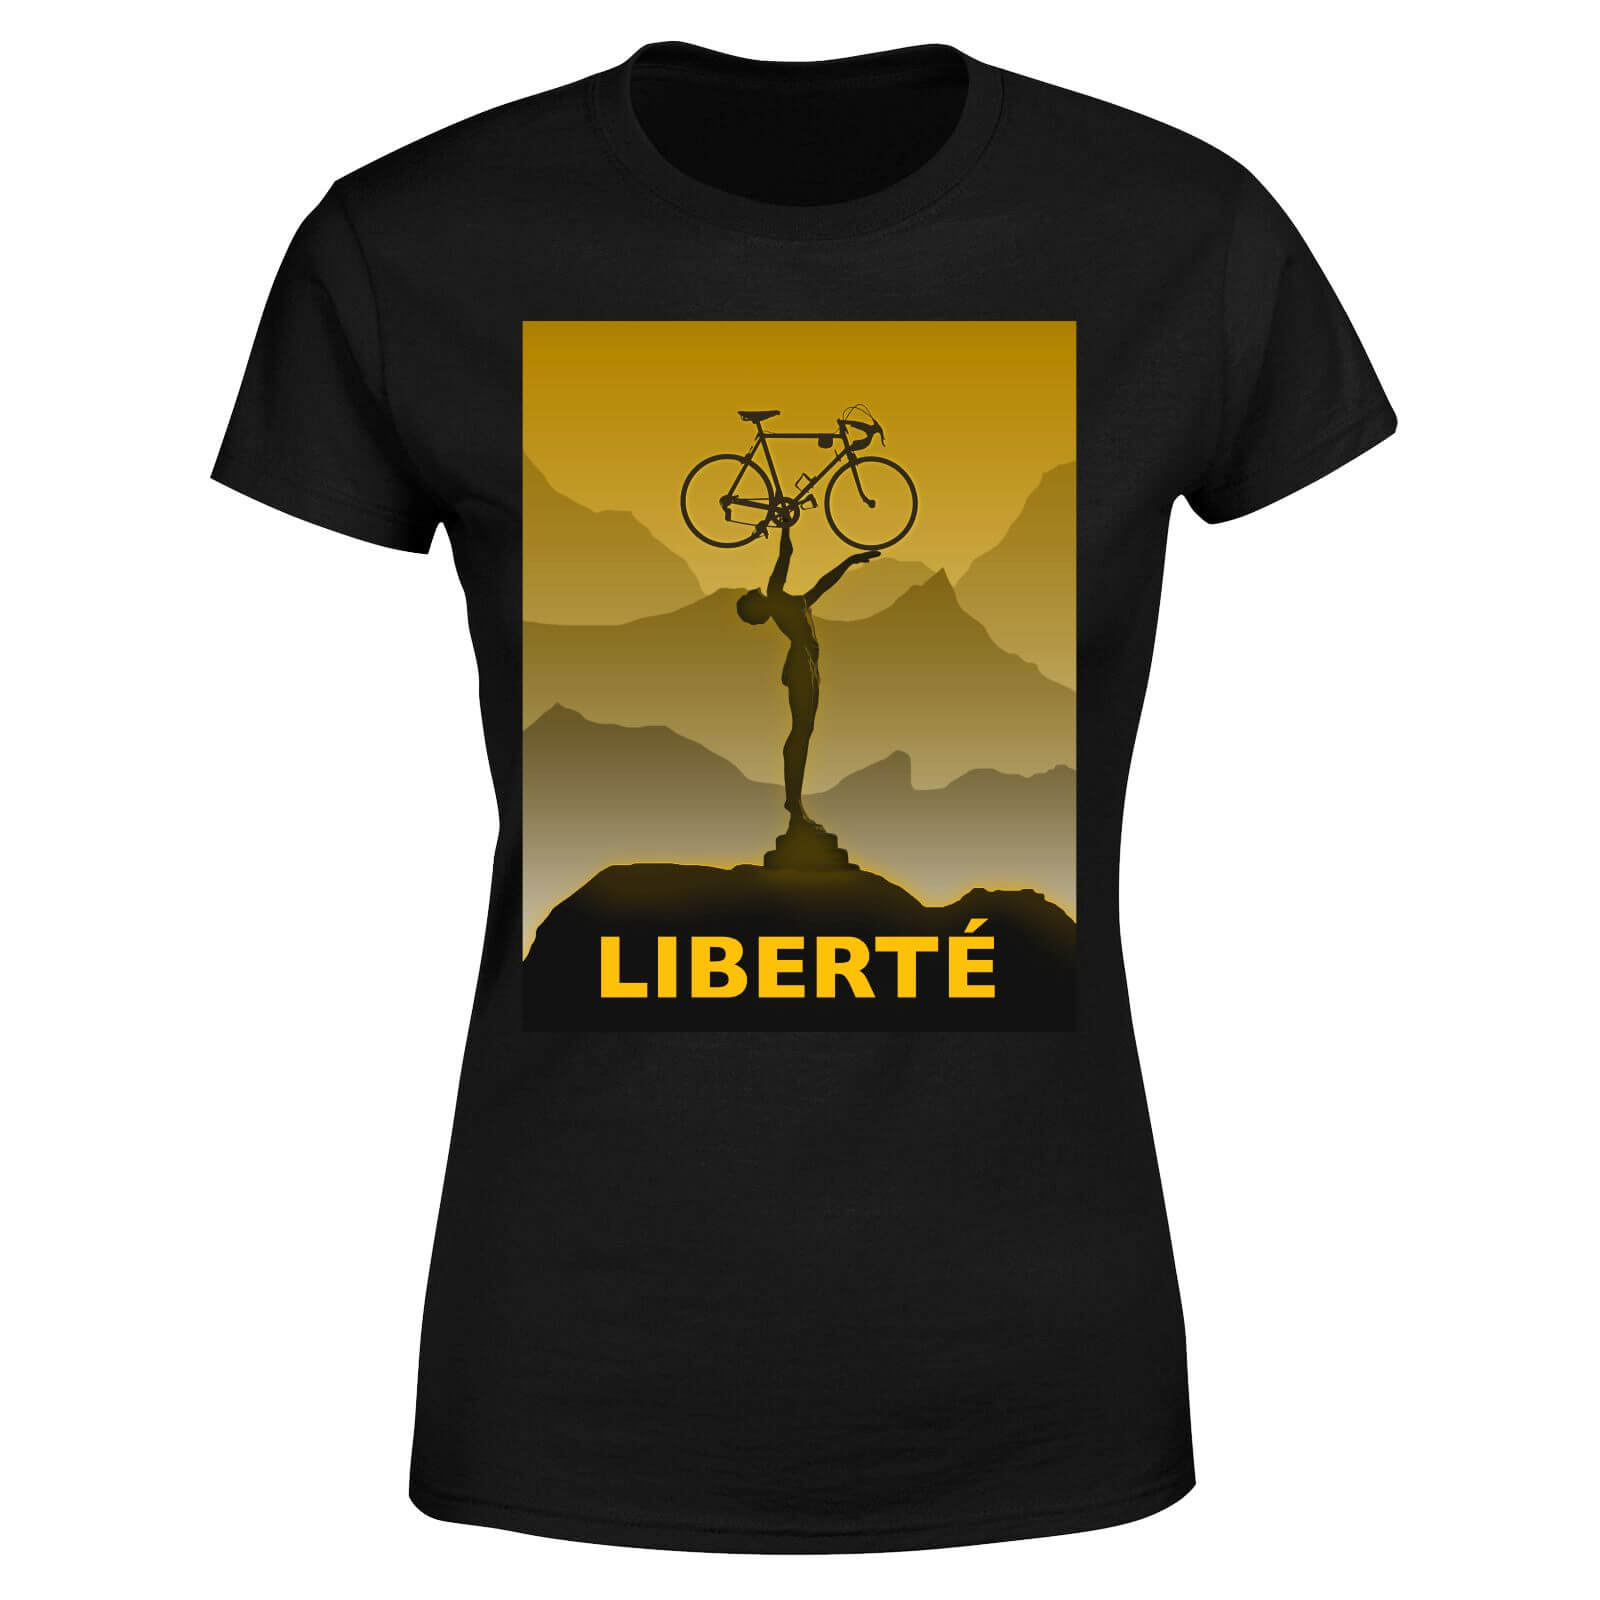 Liberte Women's T-Shirt - Black - XXL - Black